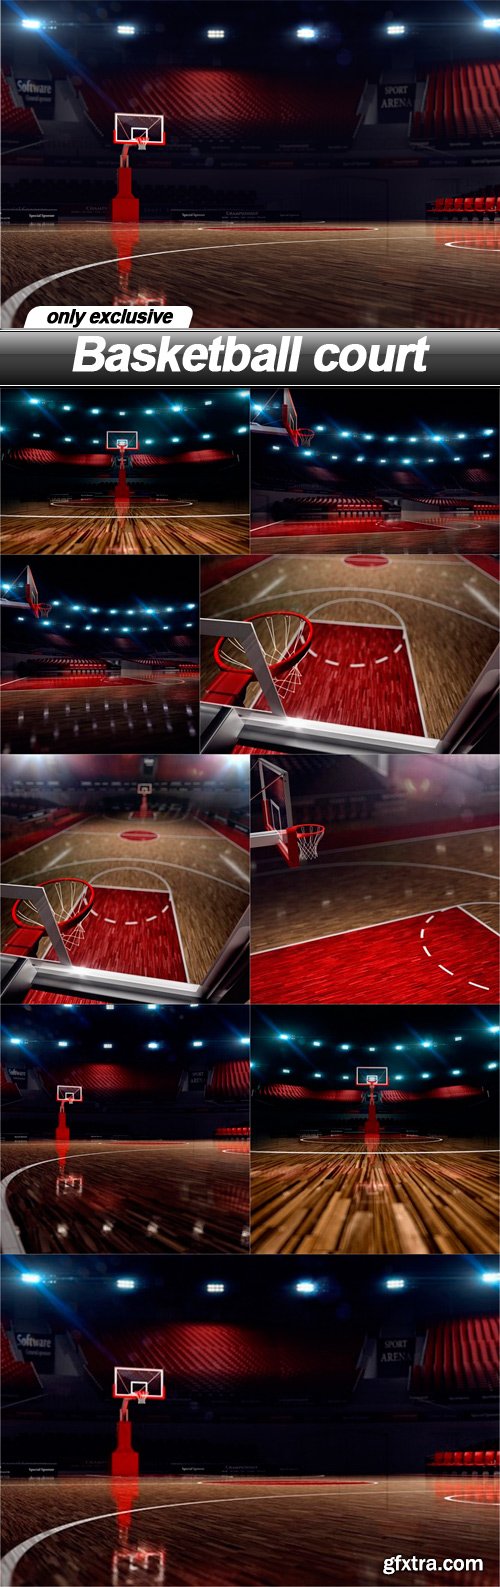 Basketball court - 9 UHQ JPEG